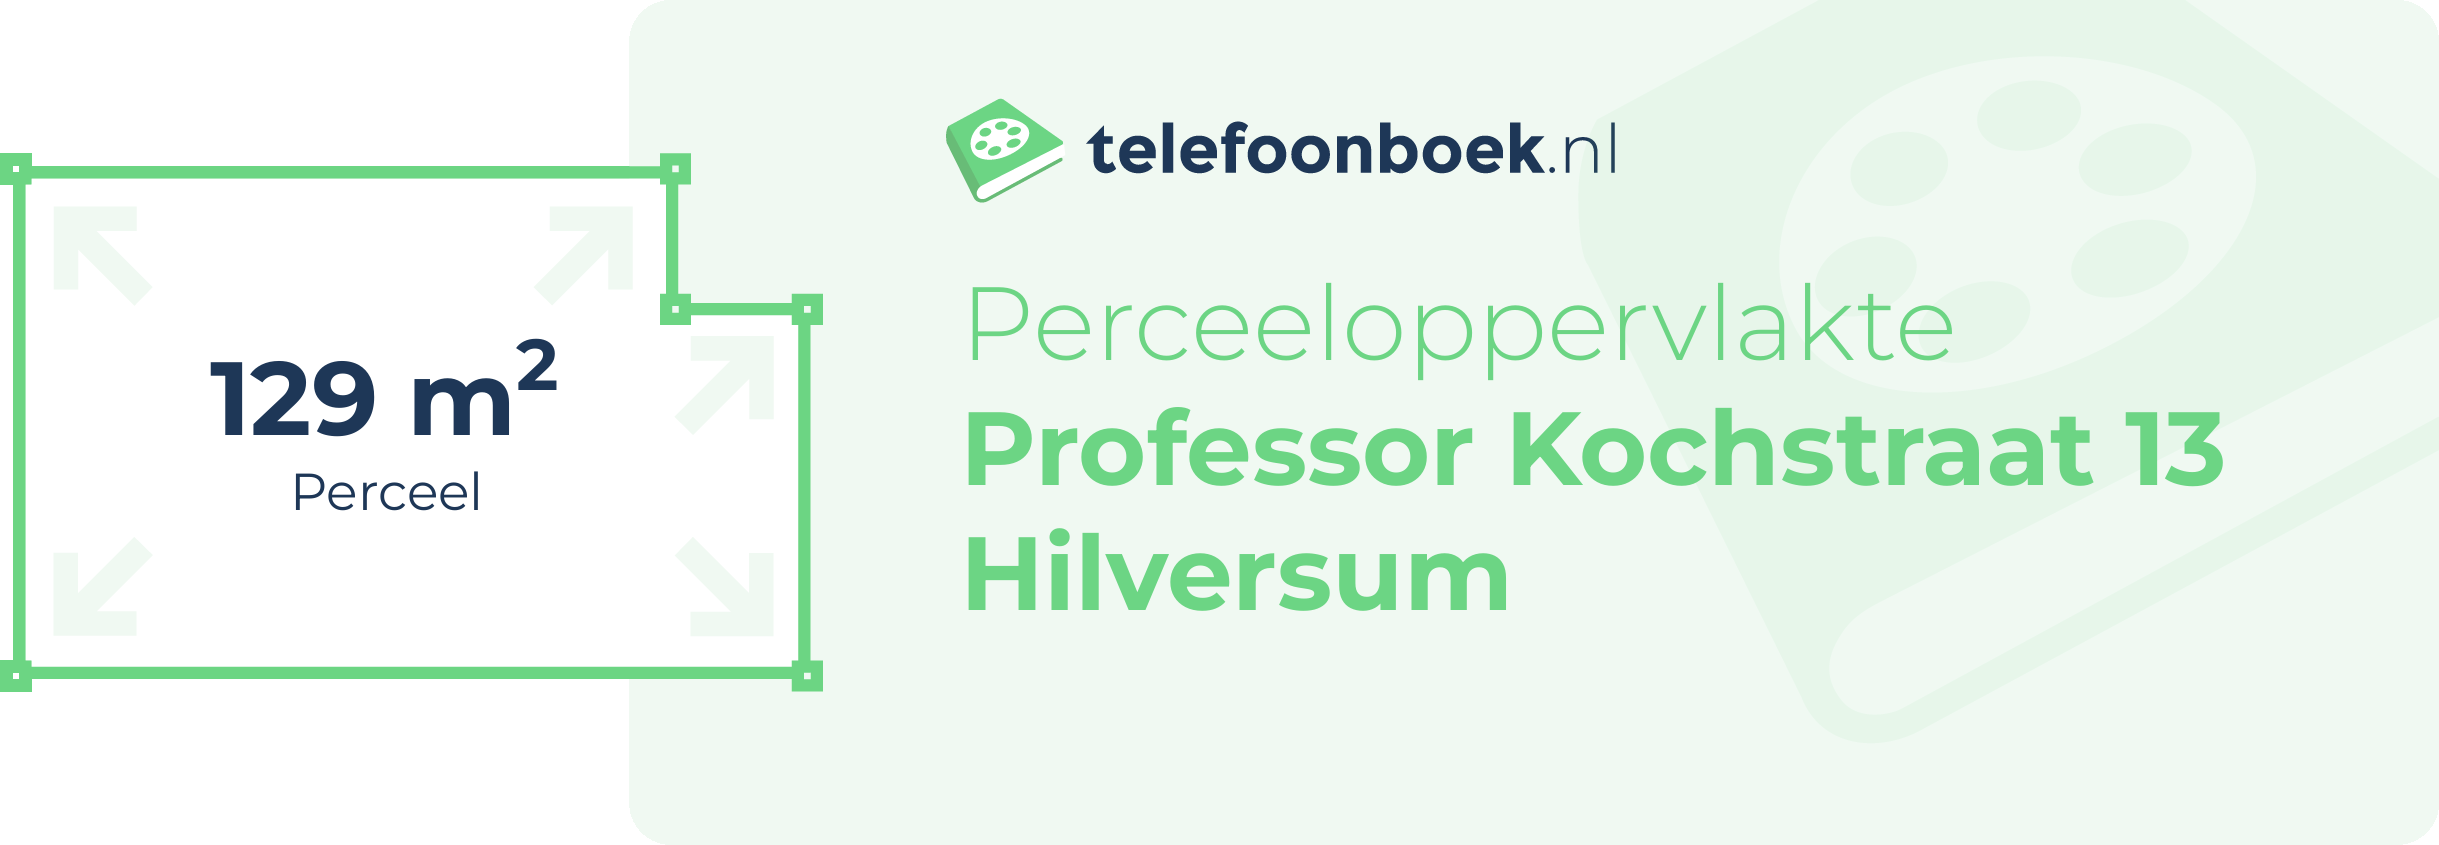 Perceeloppervlakte Professor Kochstraat 13 Hilversum